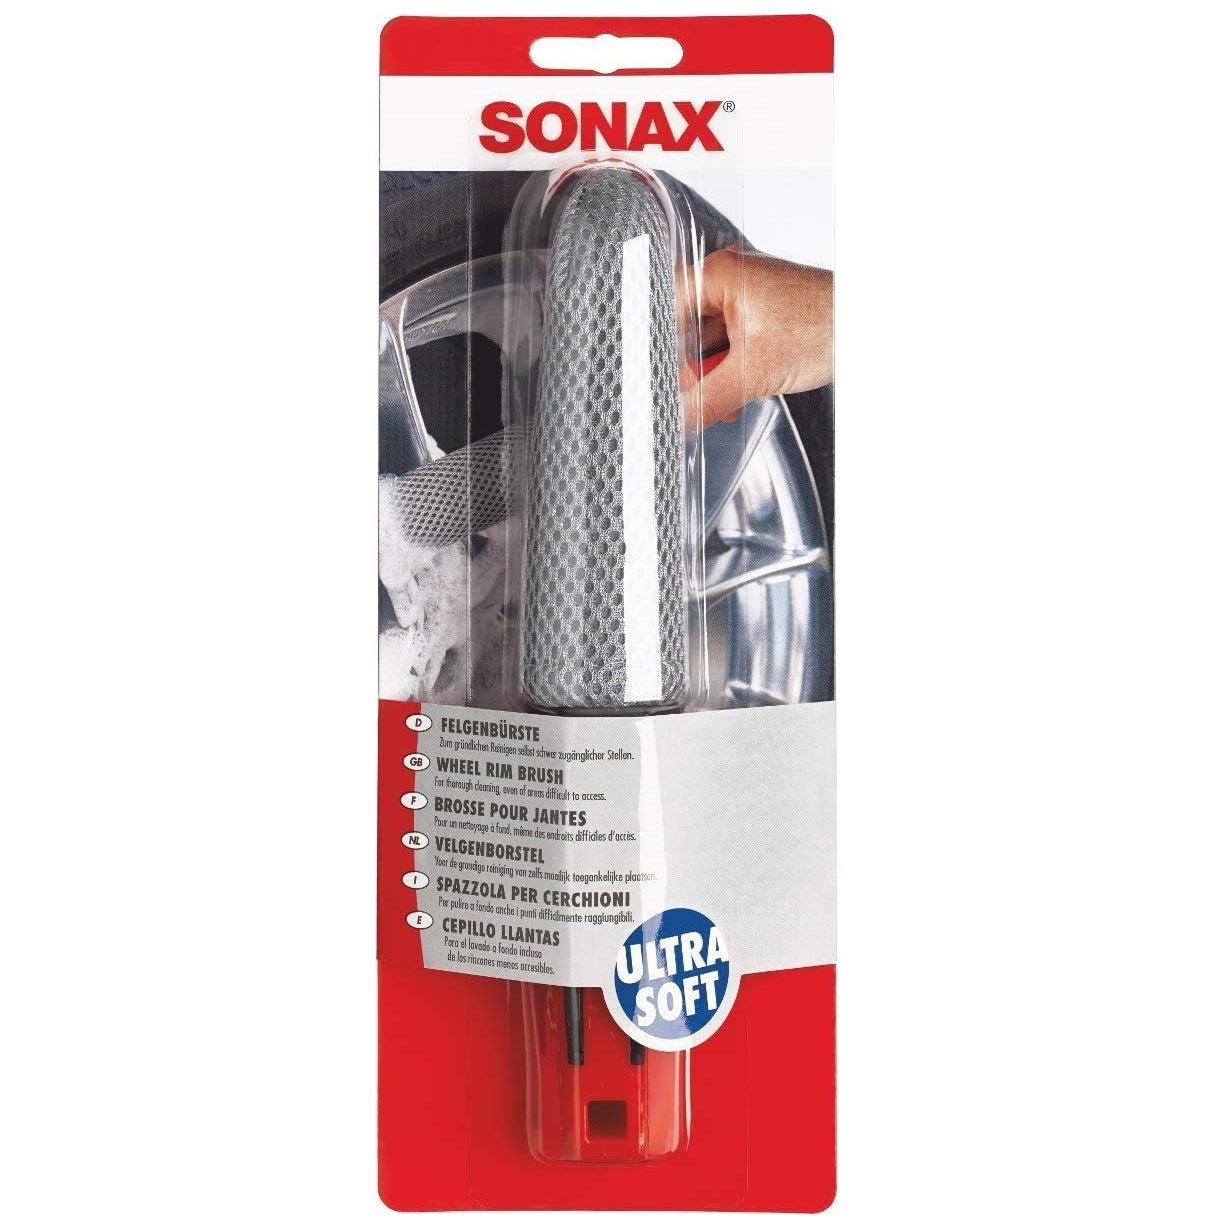 Sonax Ultra Soft Wheel Rim Brush